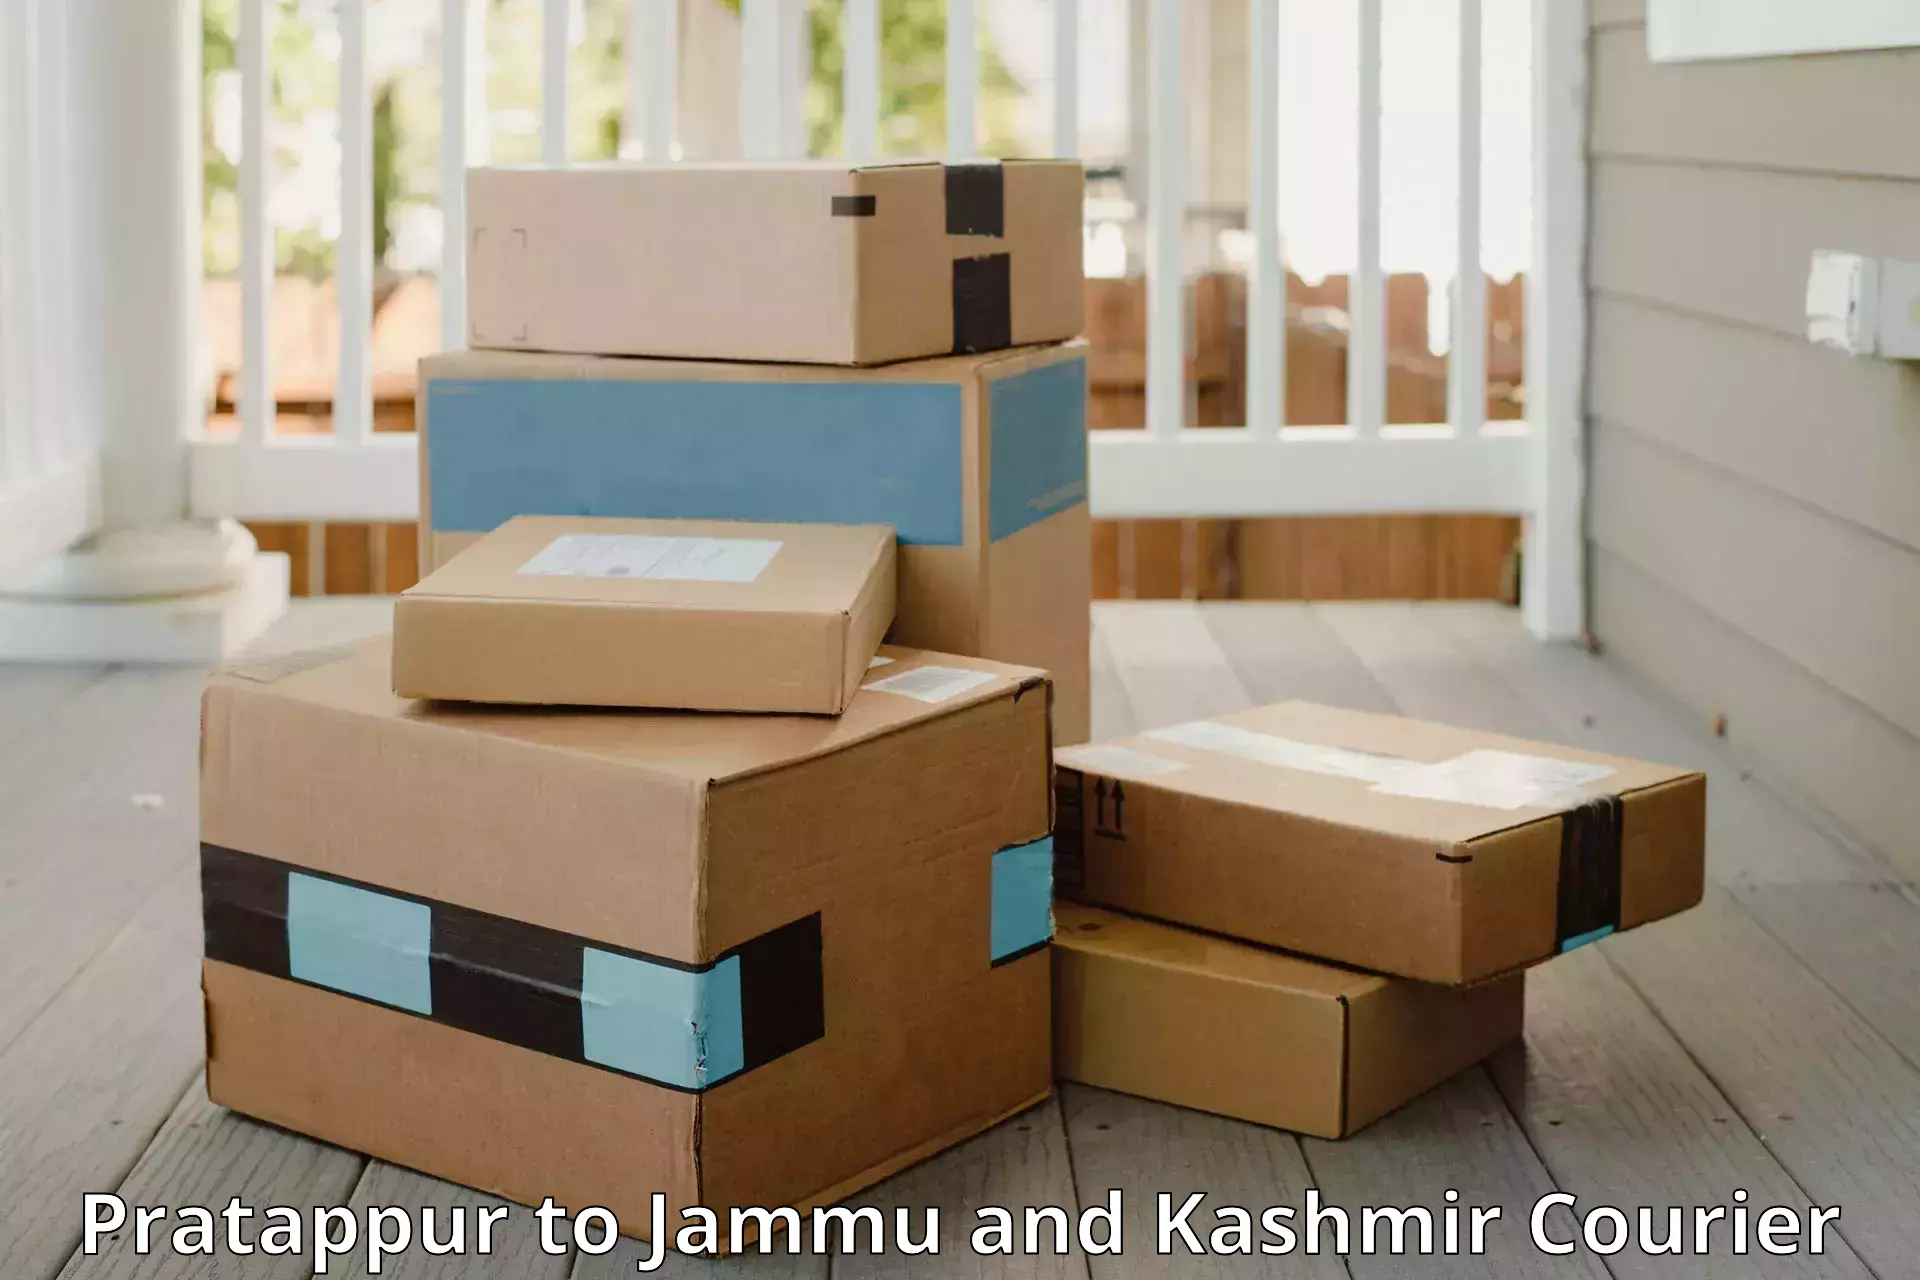 Urgent luggage shipment Pratappur to Shopian